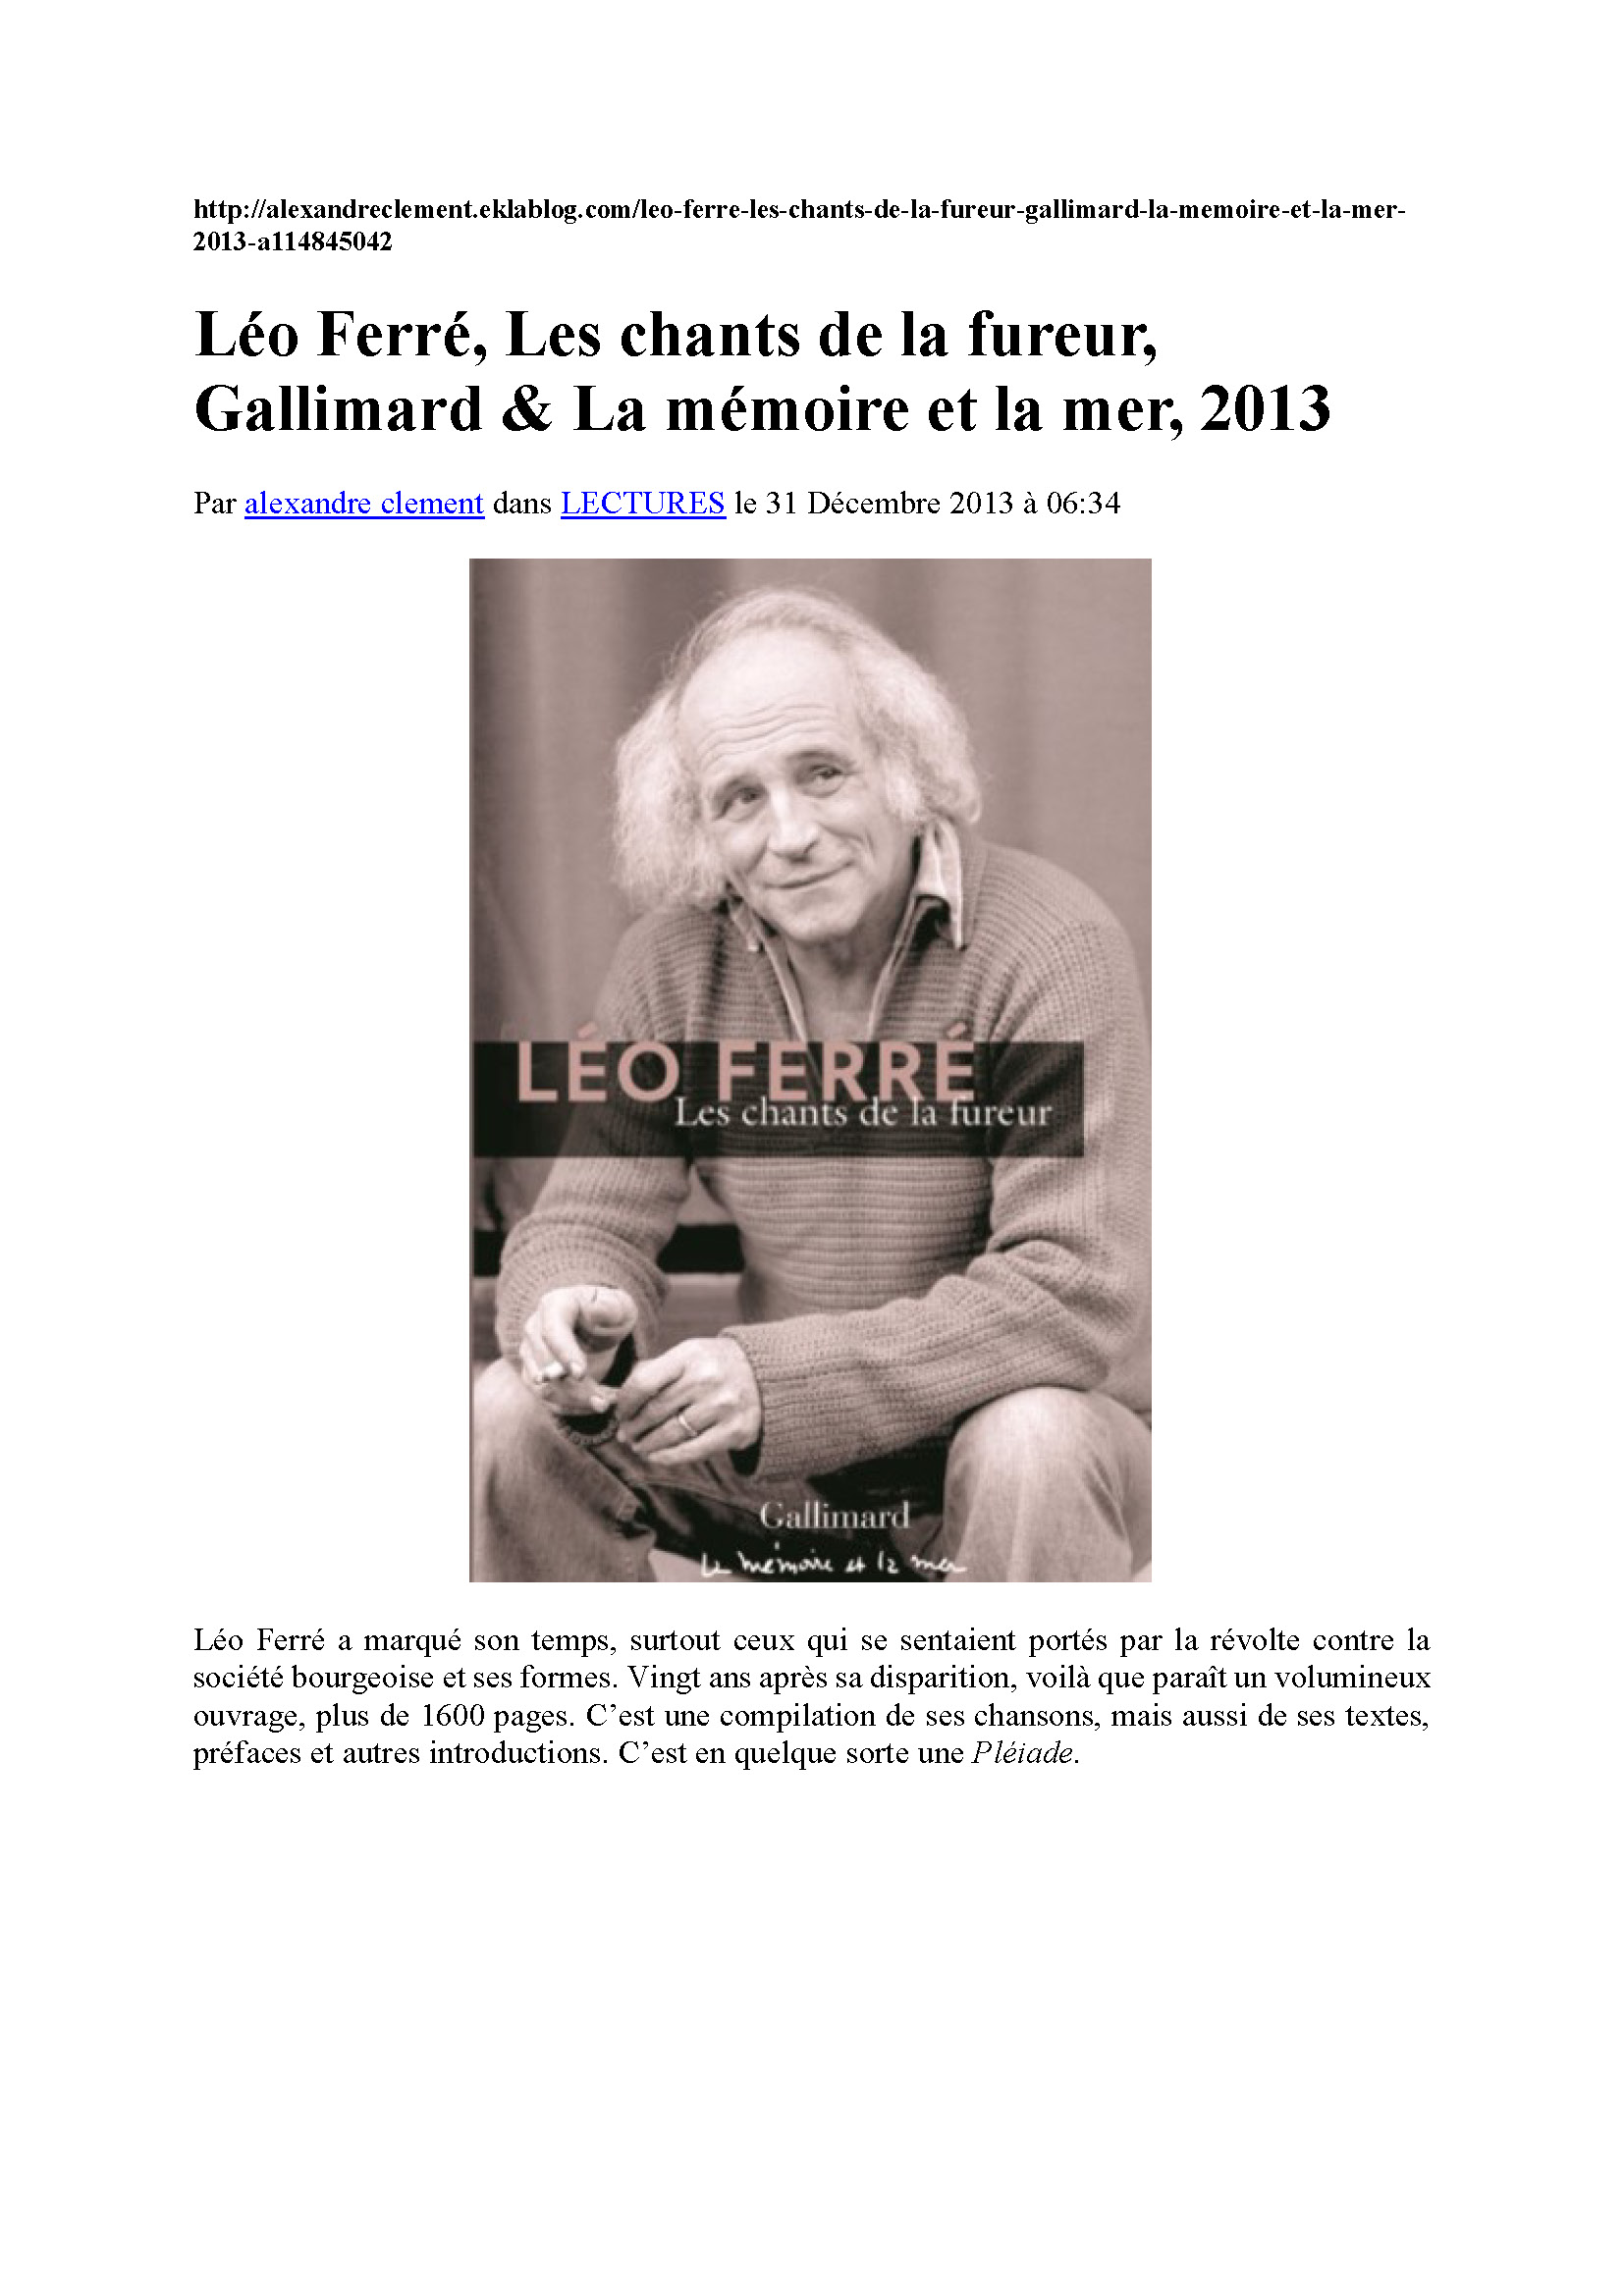 /31/12/2013 Léo Ferré Les chants de la fureur 